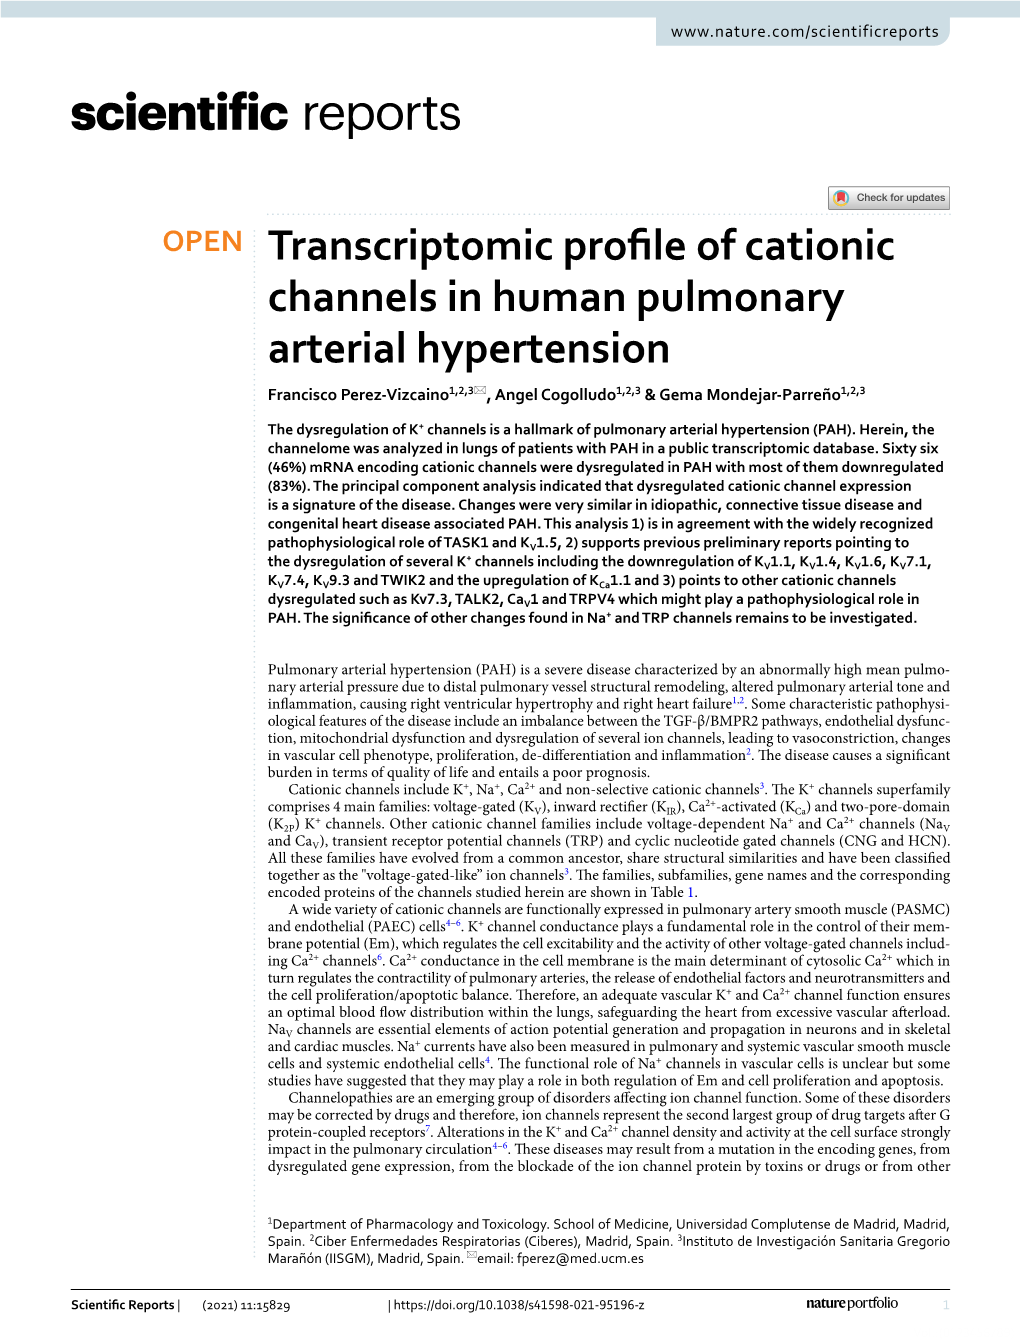 Transcriptomic Profile of Cationic Channels in Human Pulmonary Arterial Hypertension